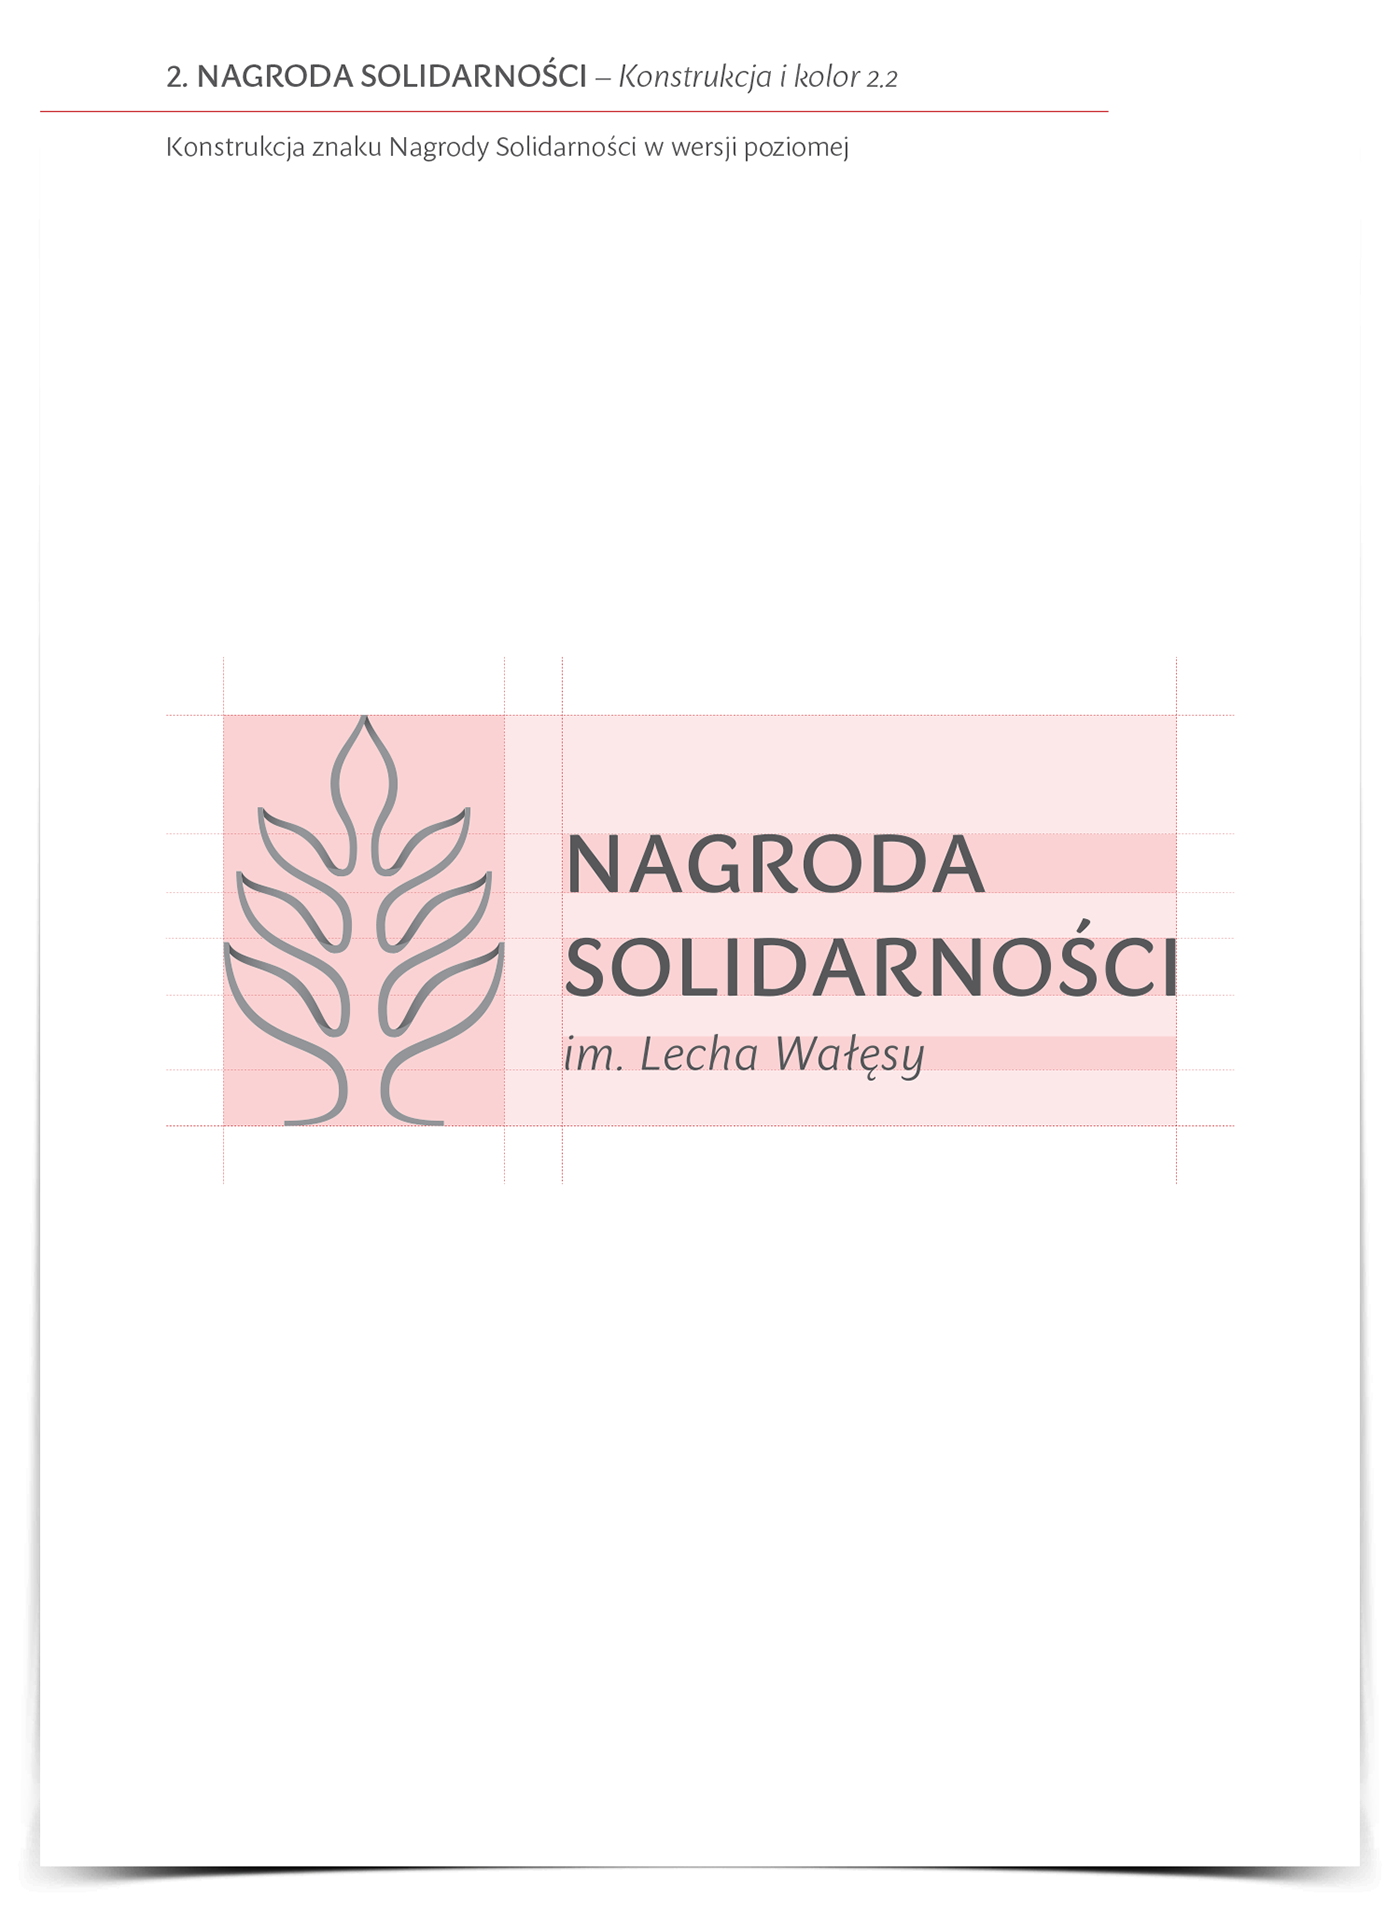 borutta SOLIDARITY PRIZE ID Mateusz Machalski  poland Solidarnosc logo walesa Lech Walesa